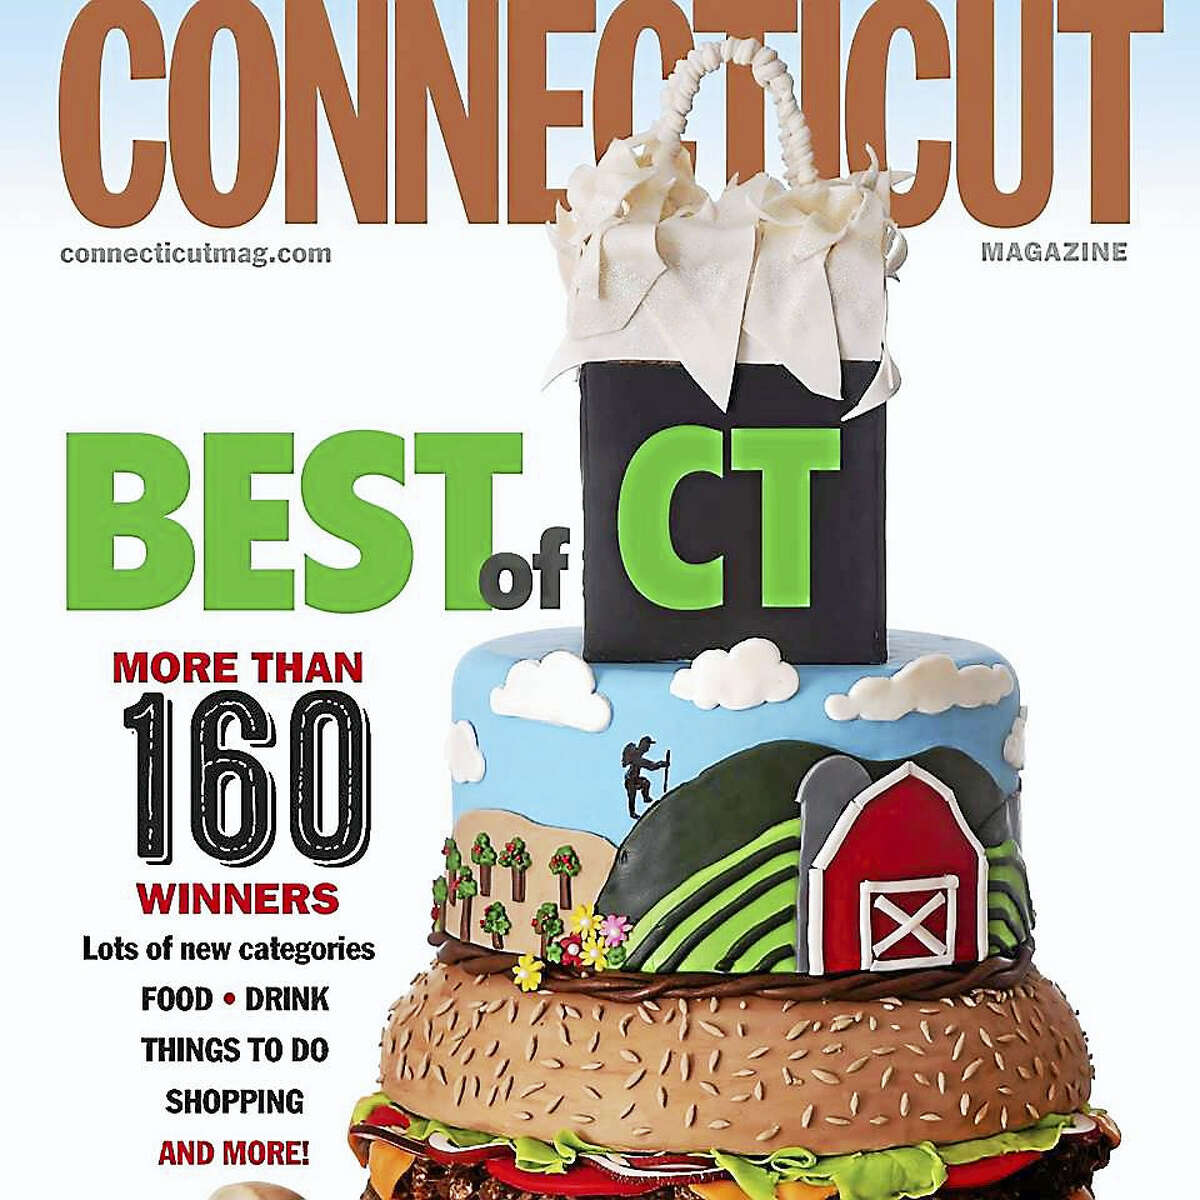 Connecticut Magazine cover